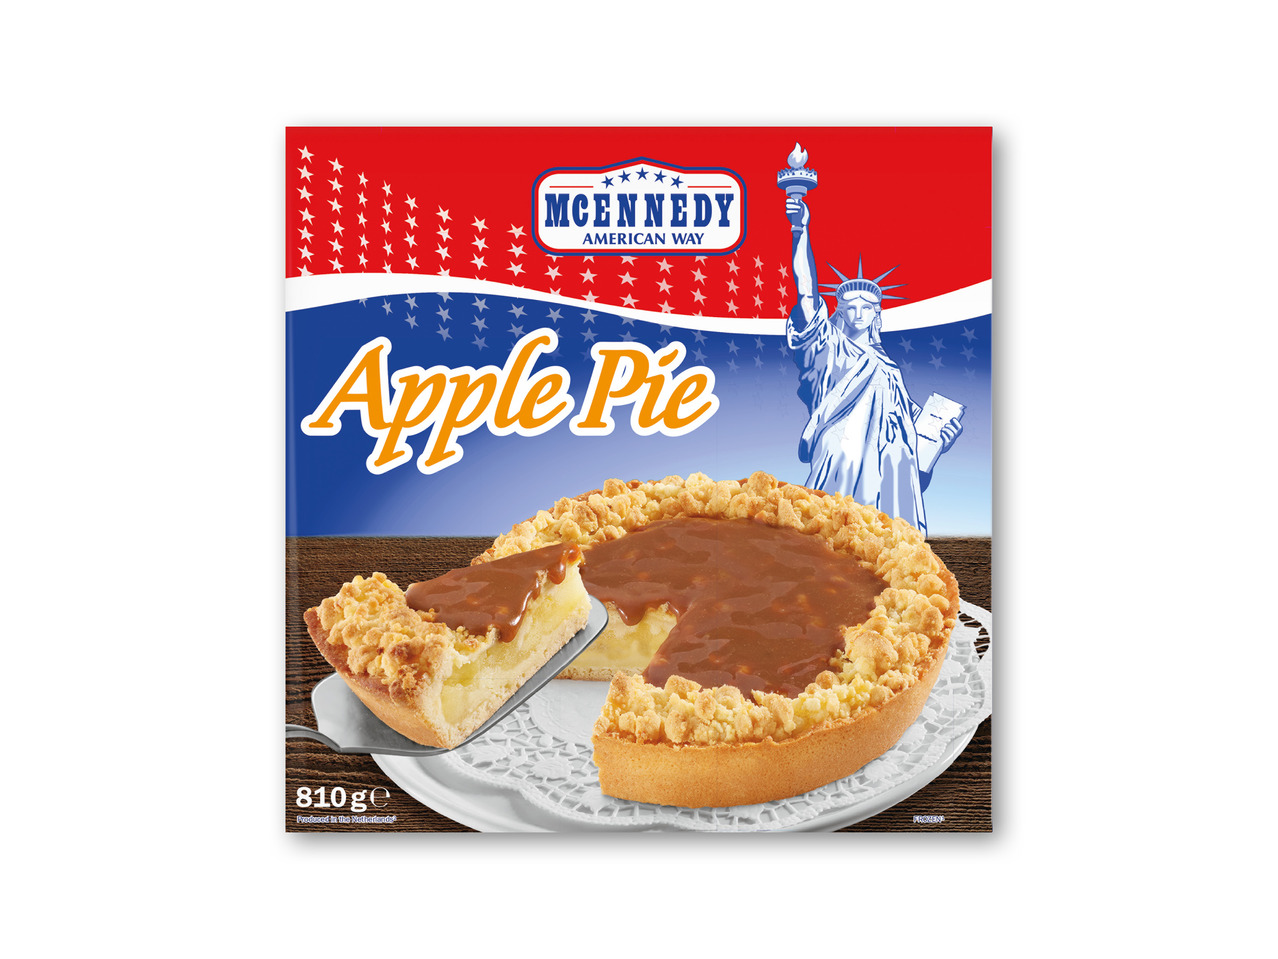 MCENNEDY Apple pie